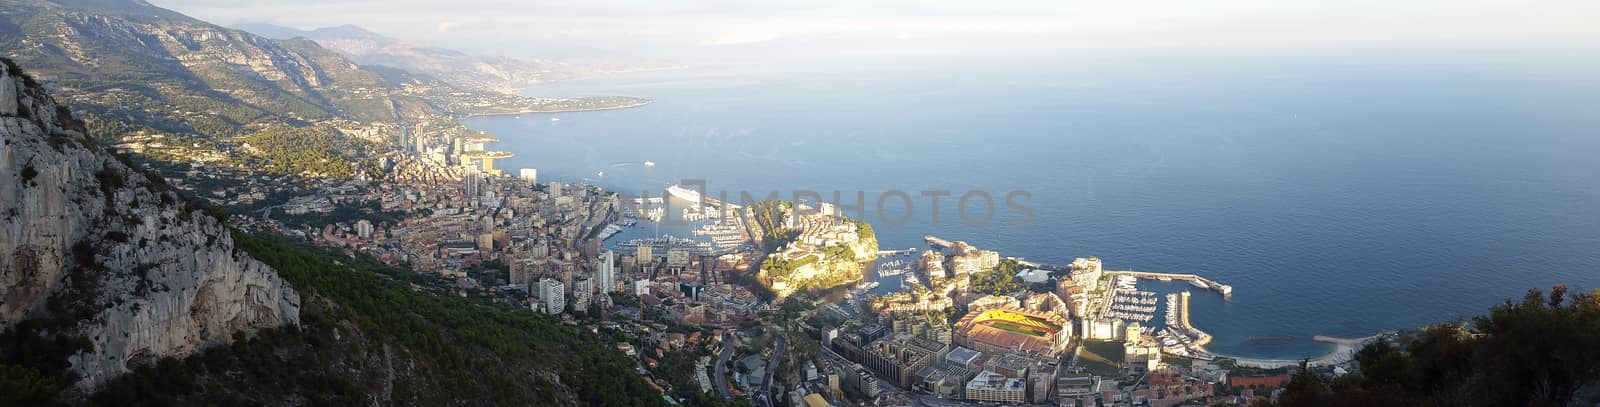 Panoramic View of the Principality of Monaco by bensib